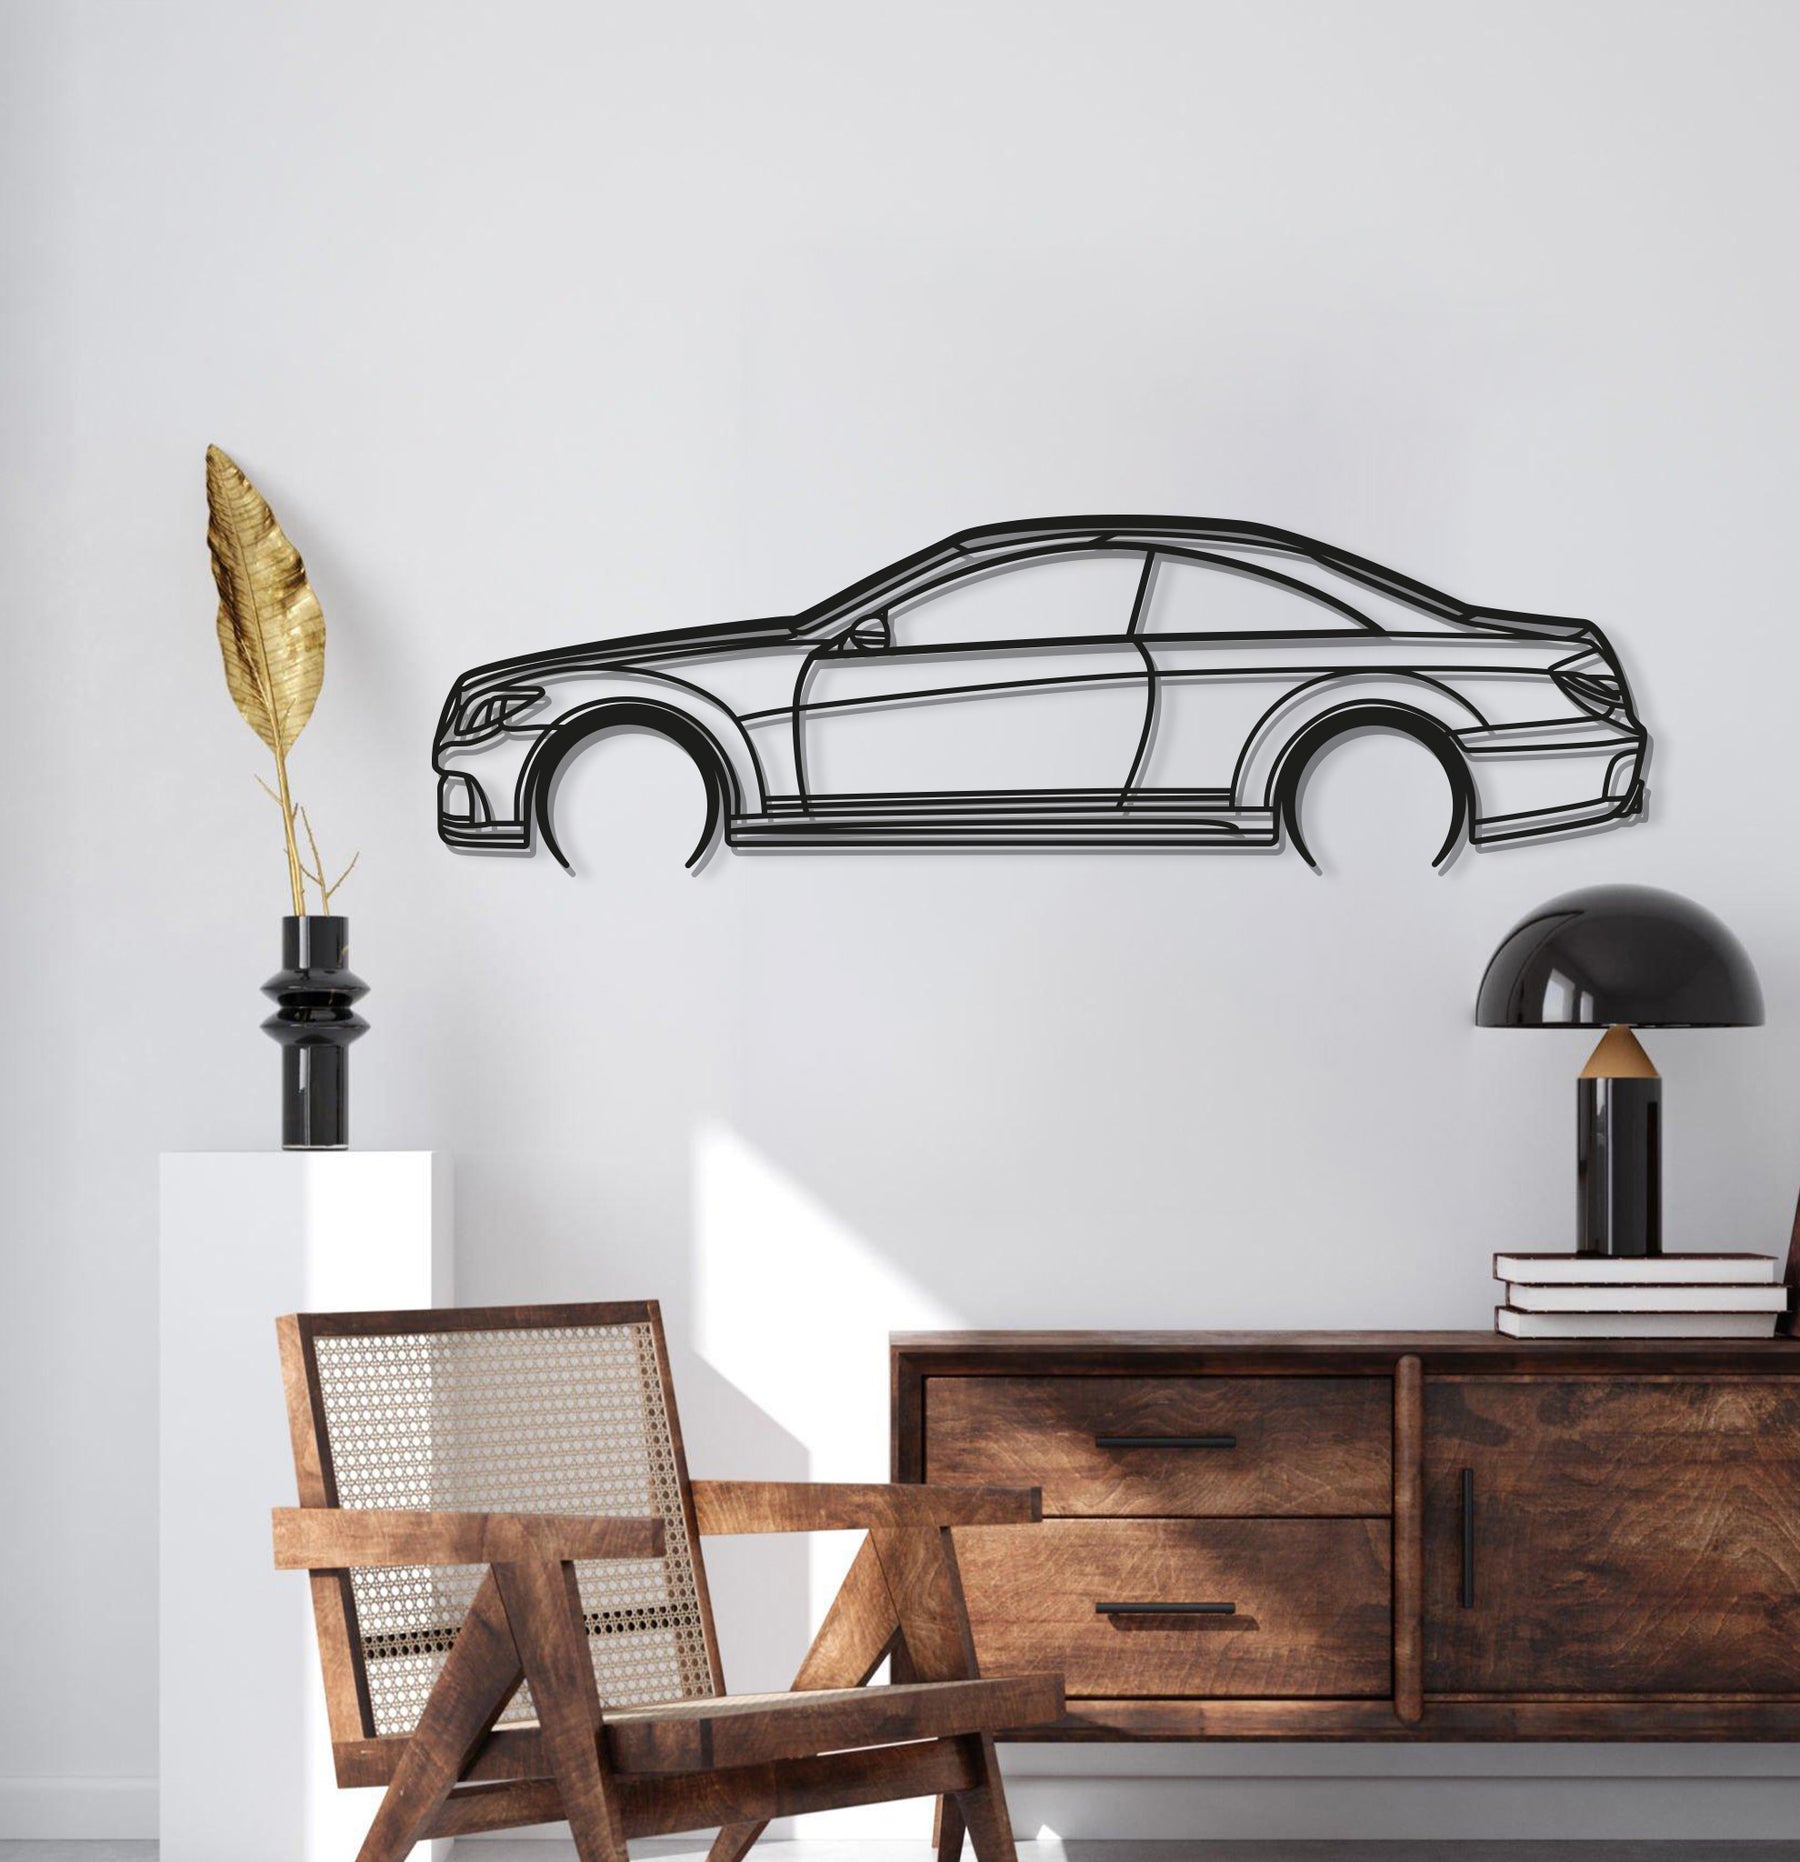 CL 500 Detailed Metal Car Wall Art - MT0903